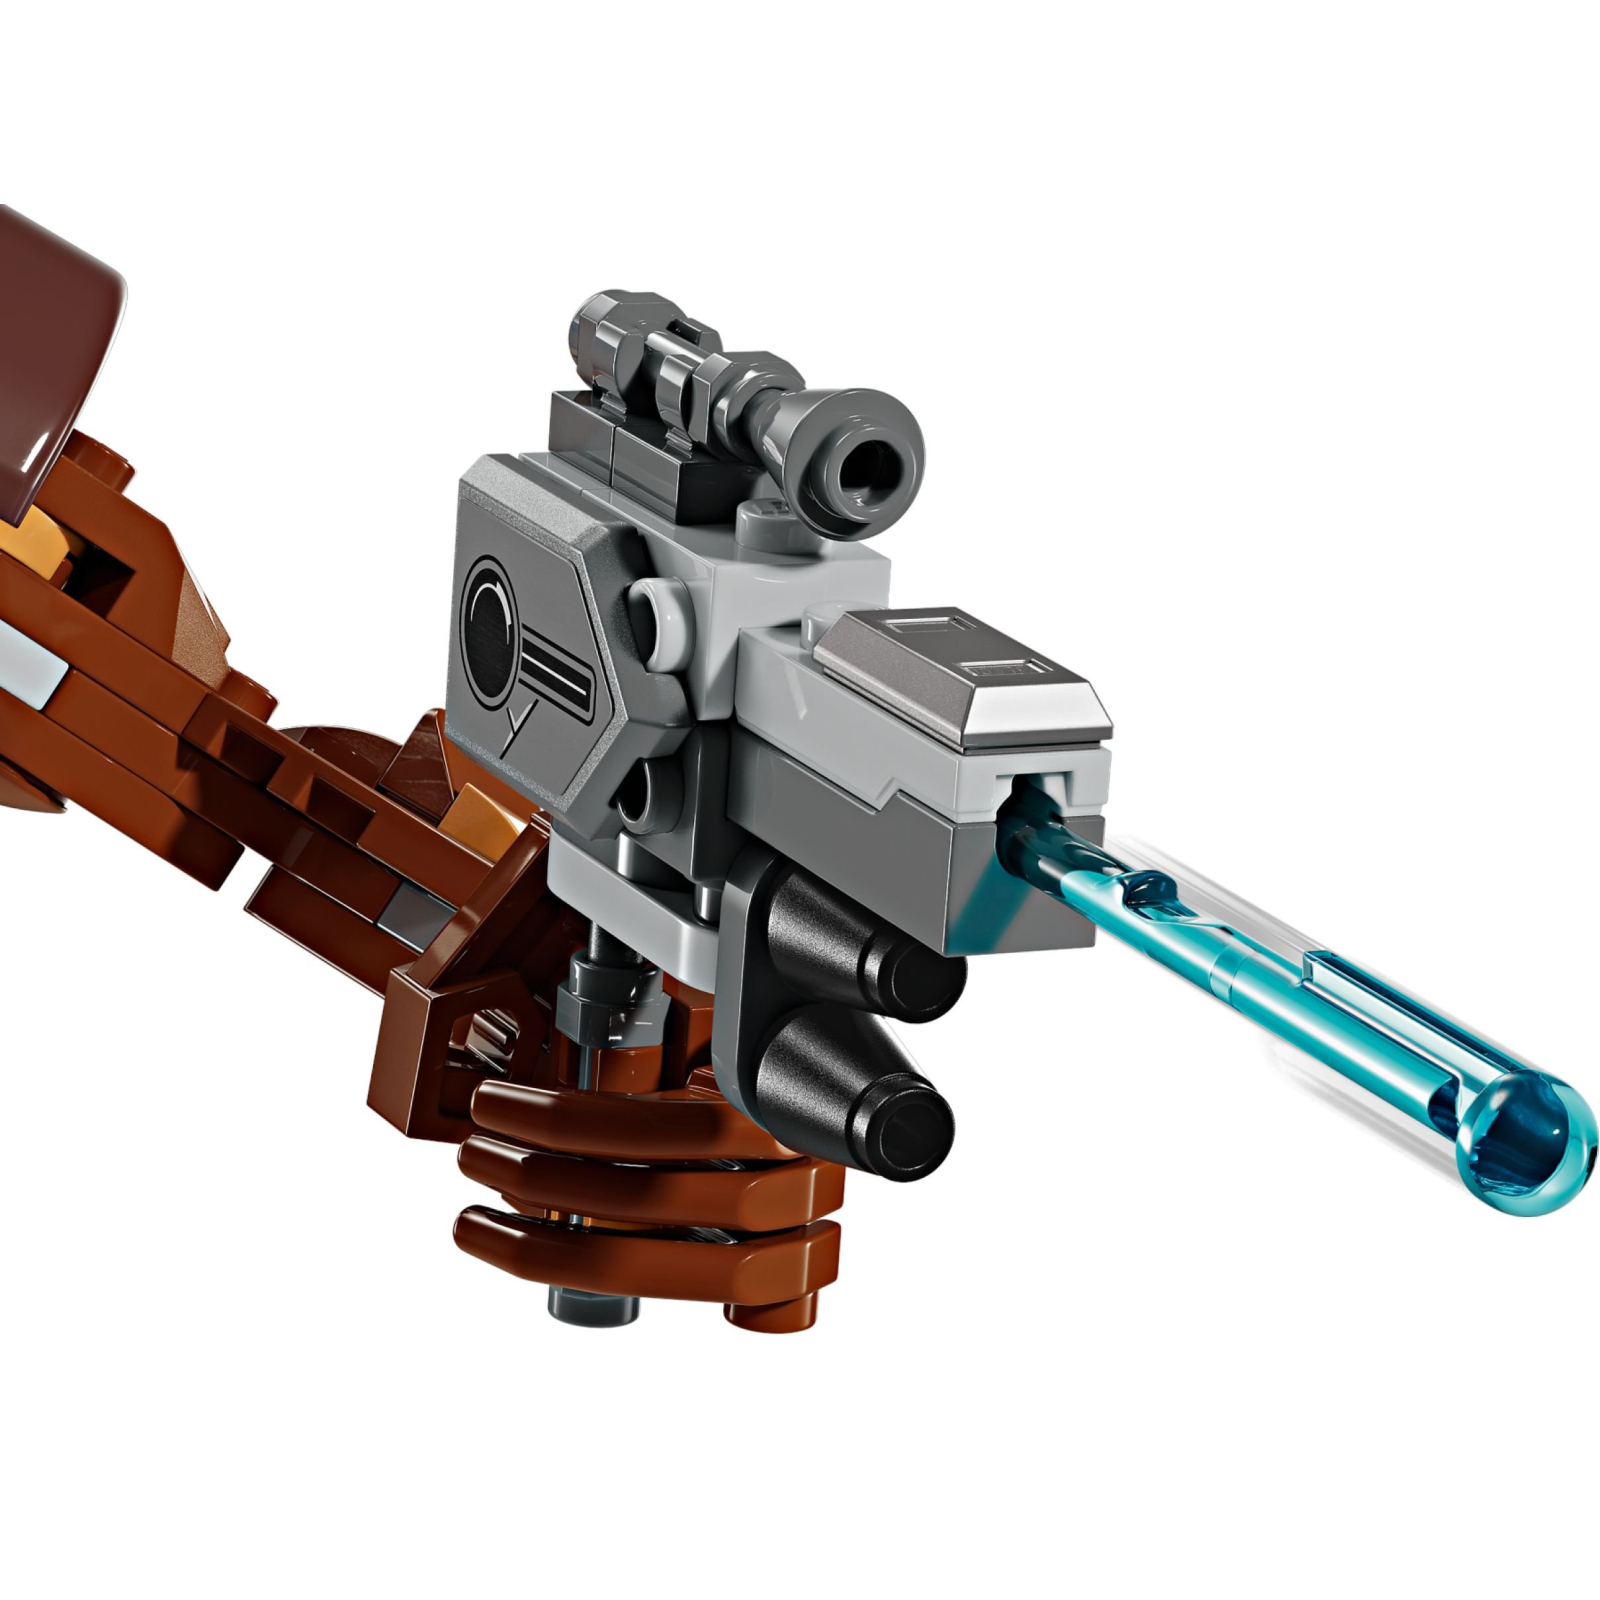 Конструктор LEGO Super Heroes Ракета й малюк Ґрут 566 деталей (76282) зображення 5